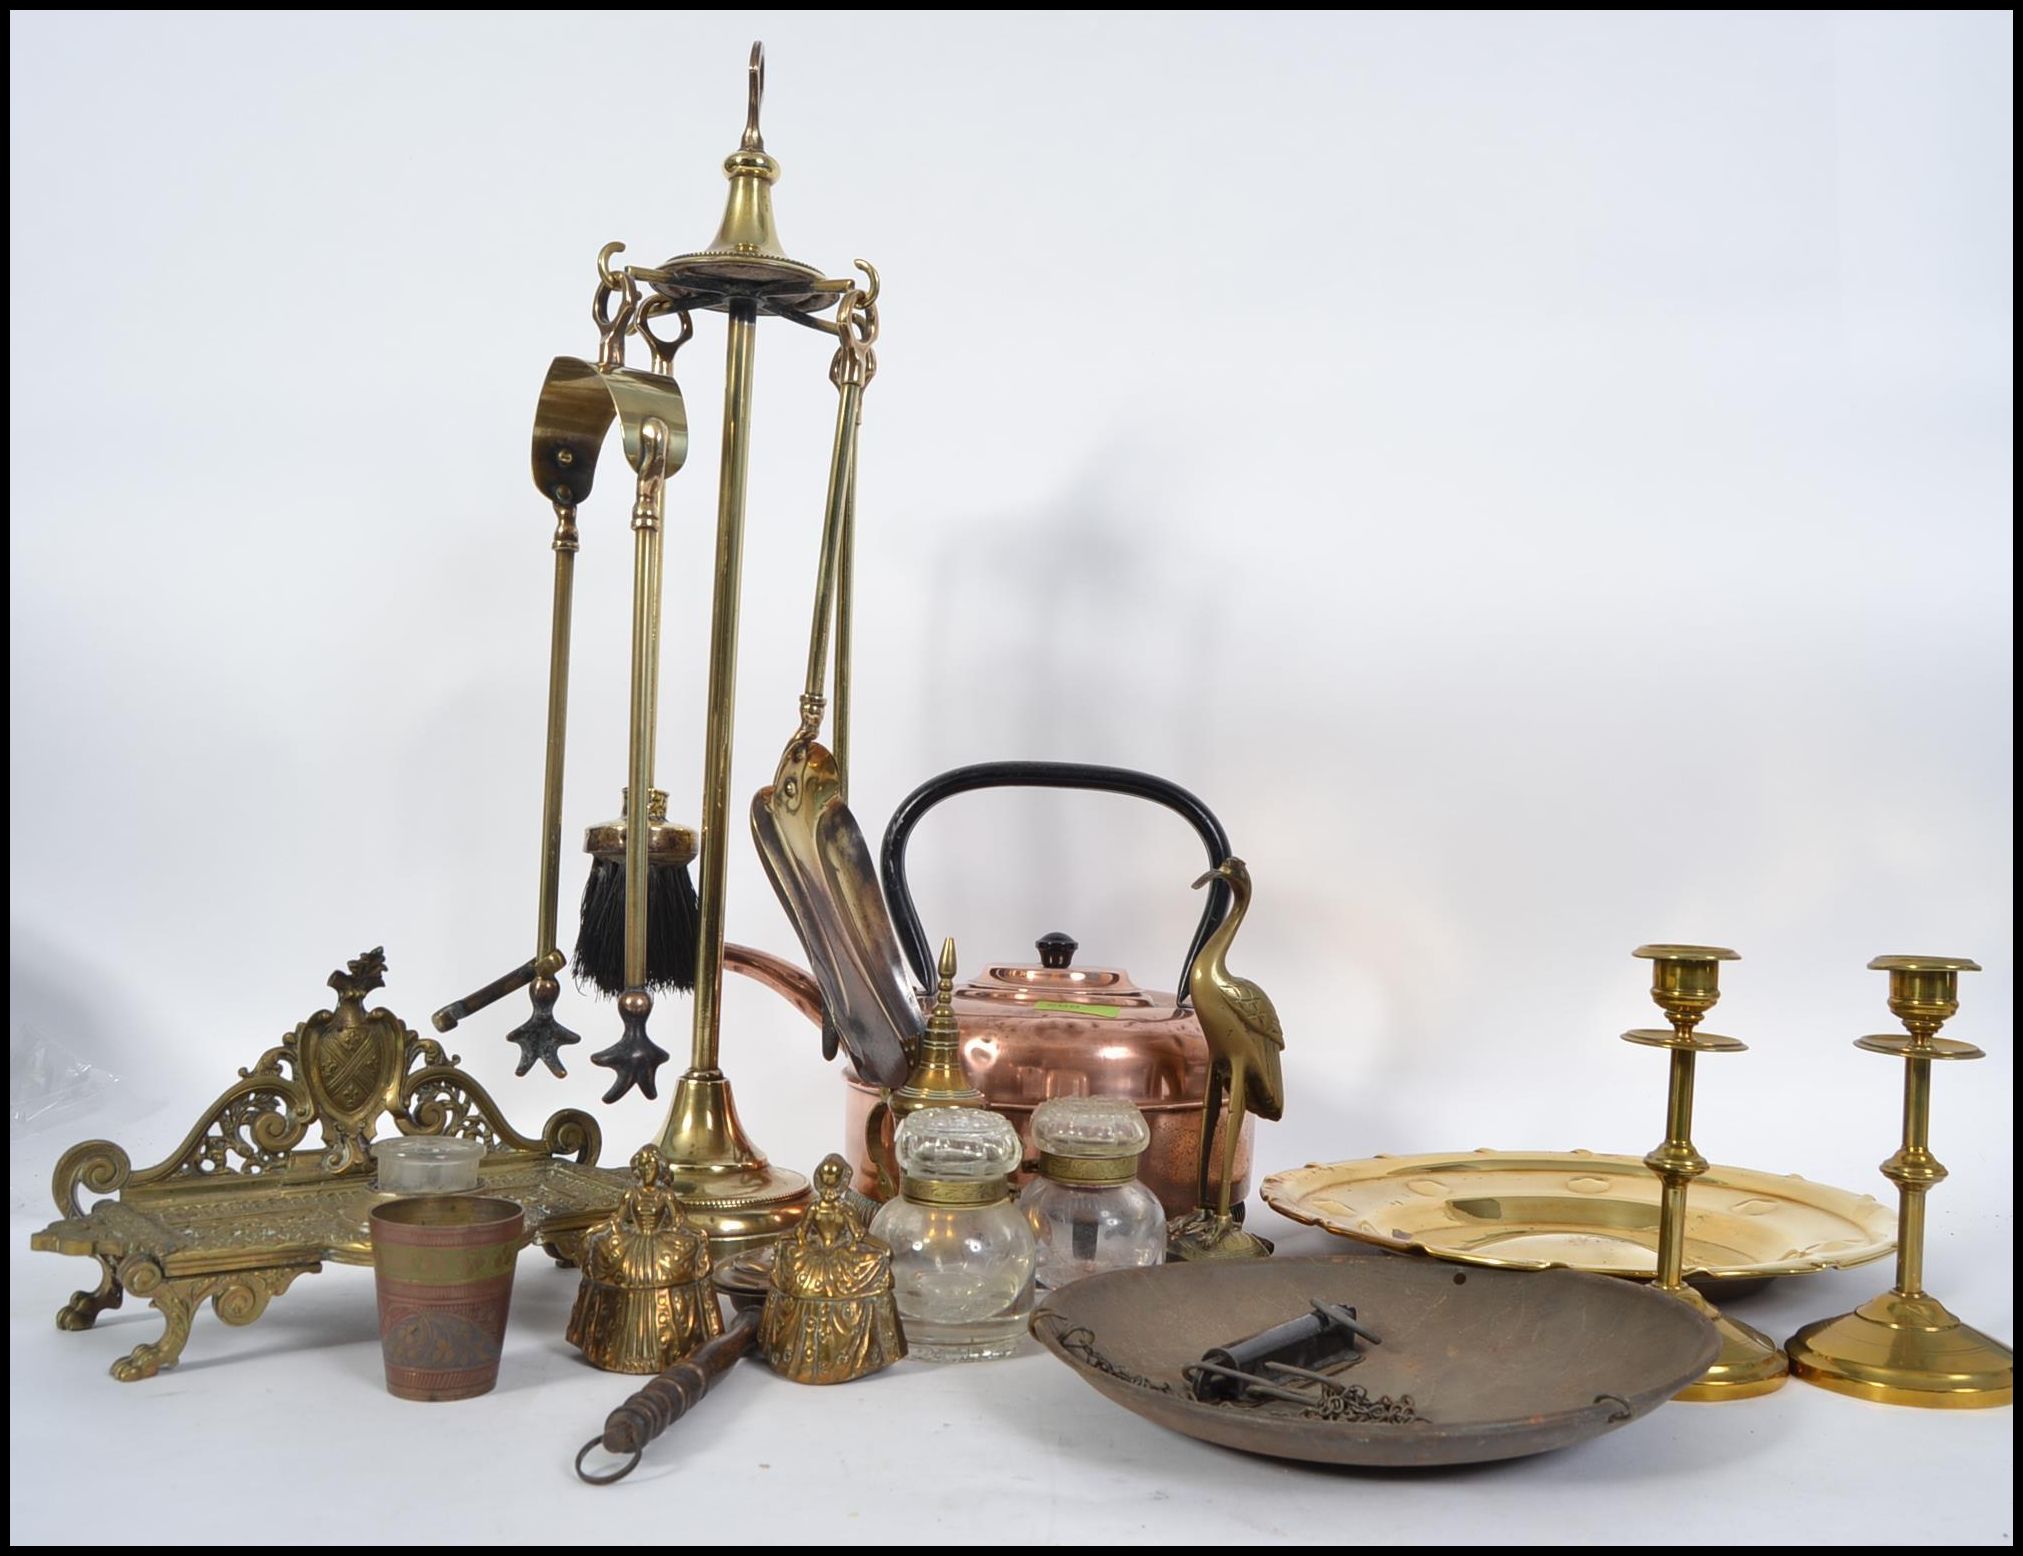 A good quality brass fireside compendium set, brass kettle, scales,